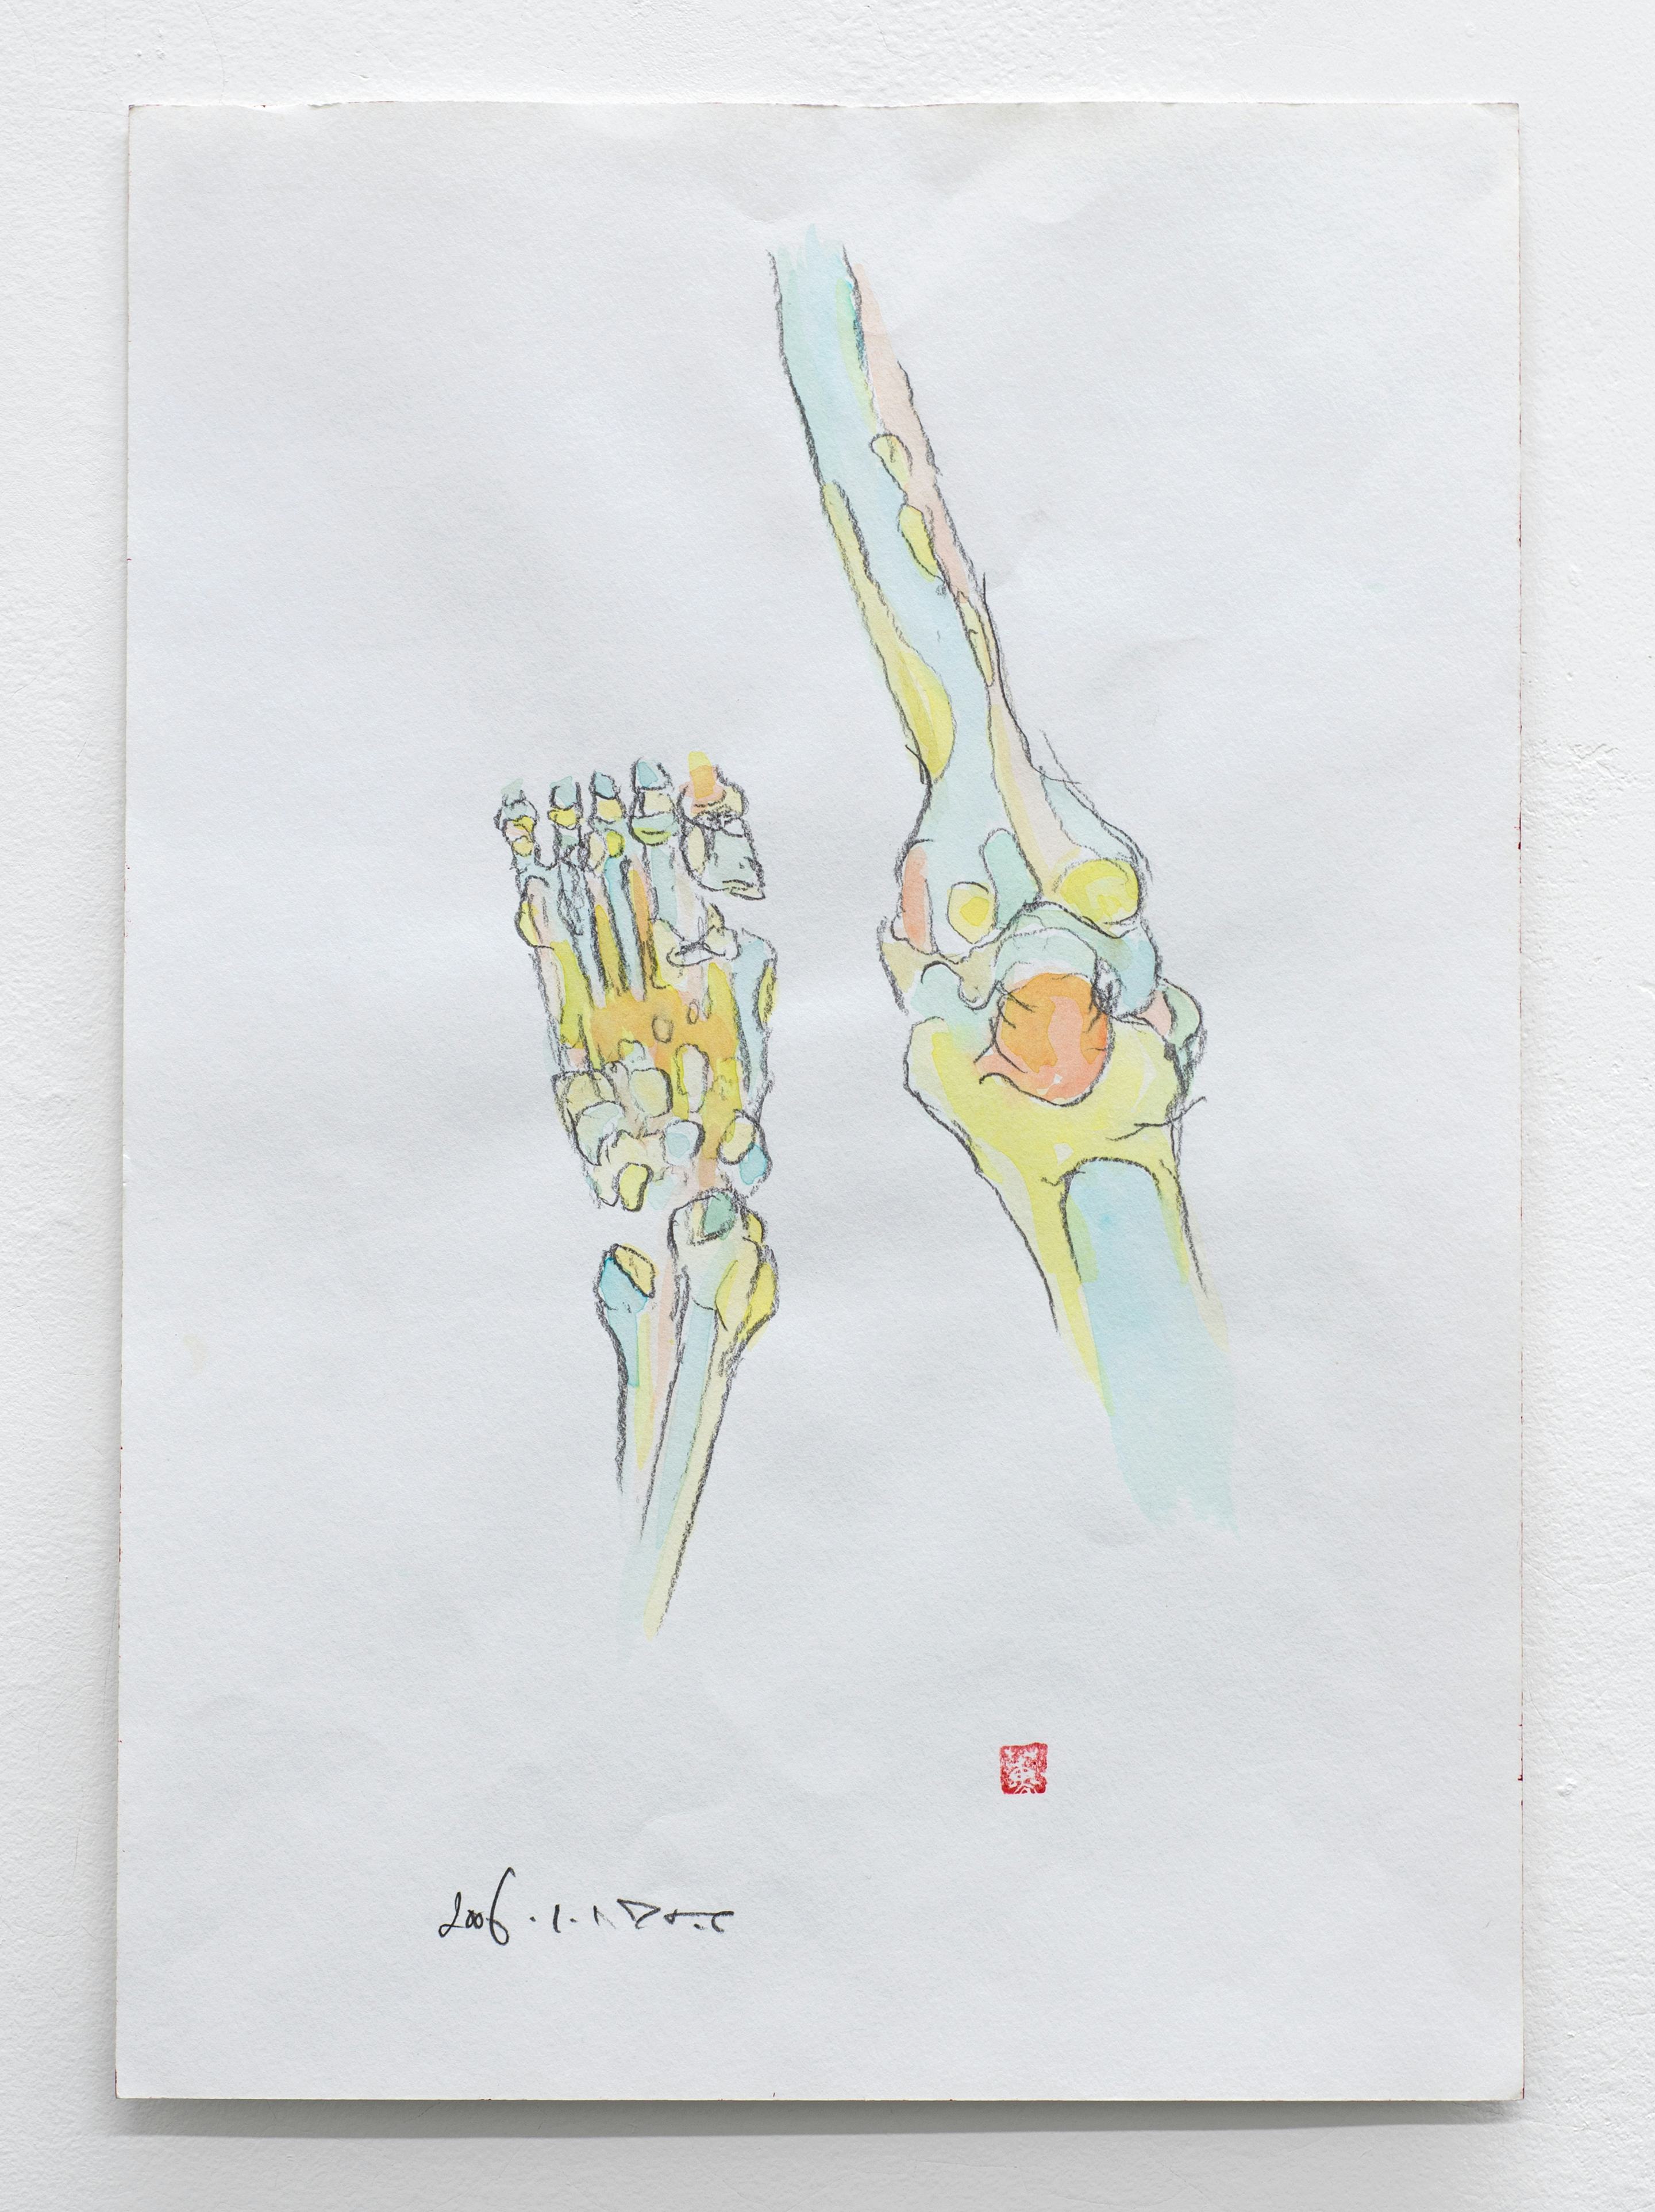 Leg Bones 2006.01.17 (2006)
Watercolor, pencil on paper. 14.25 x 10.15 inches, 36.3 x 25.8 cm